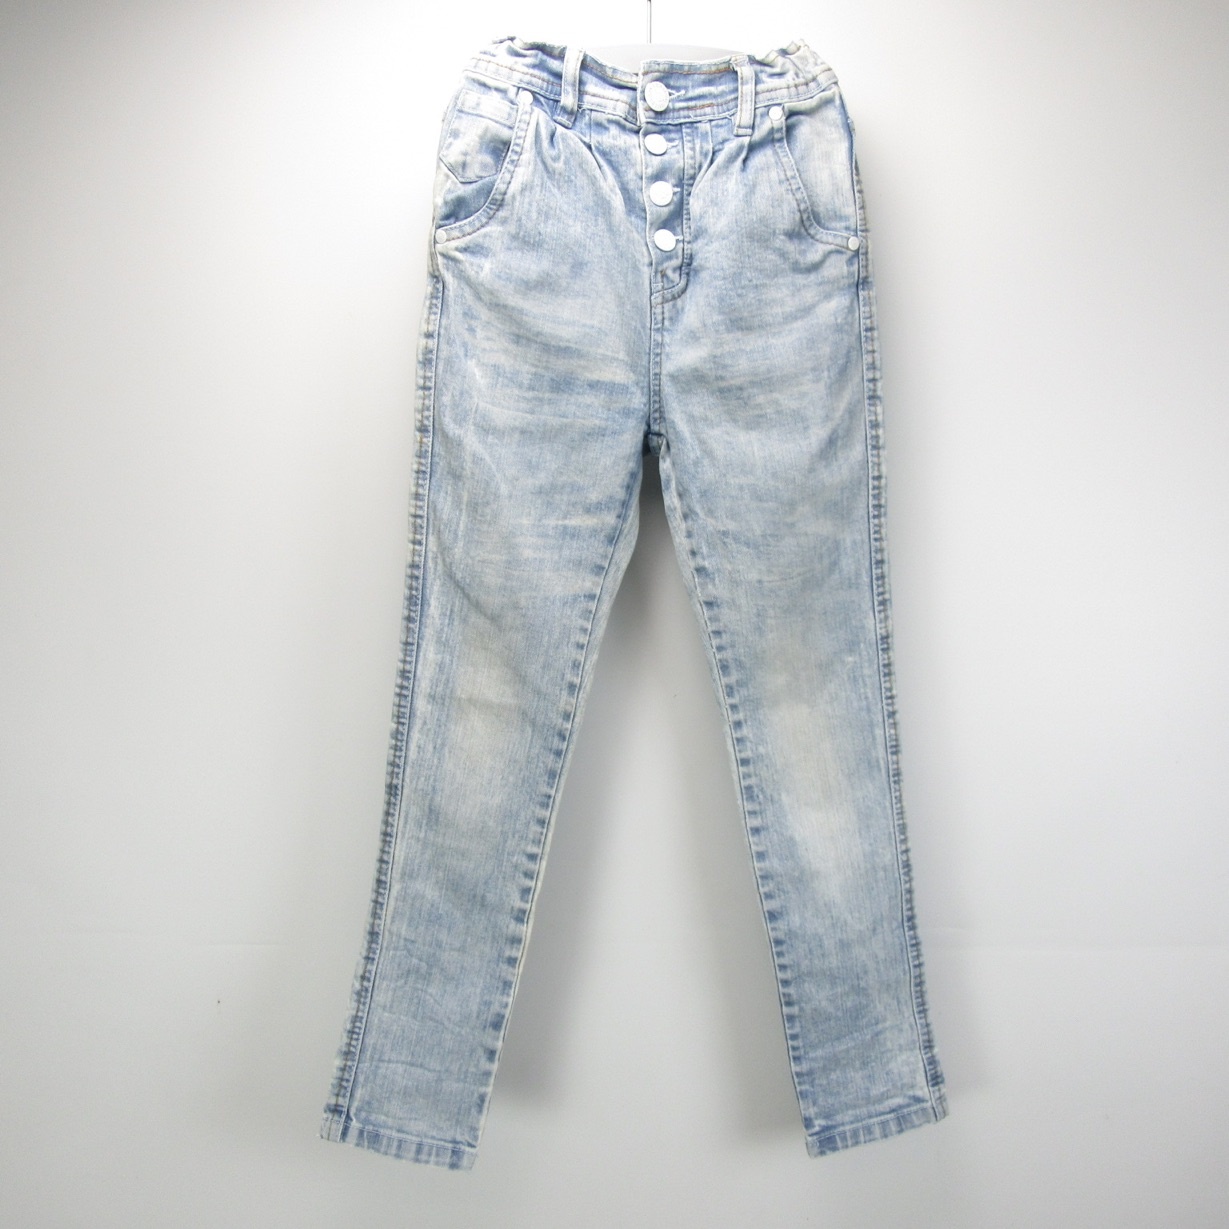 Inleg spuiten regeling Stoere skinny jeans (140) - Tientjeofminder.nl